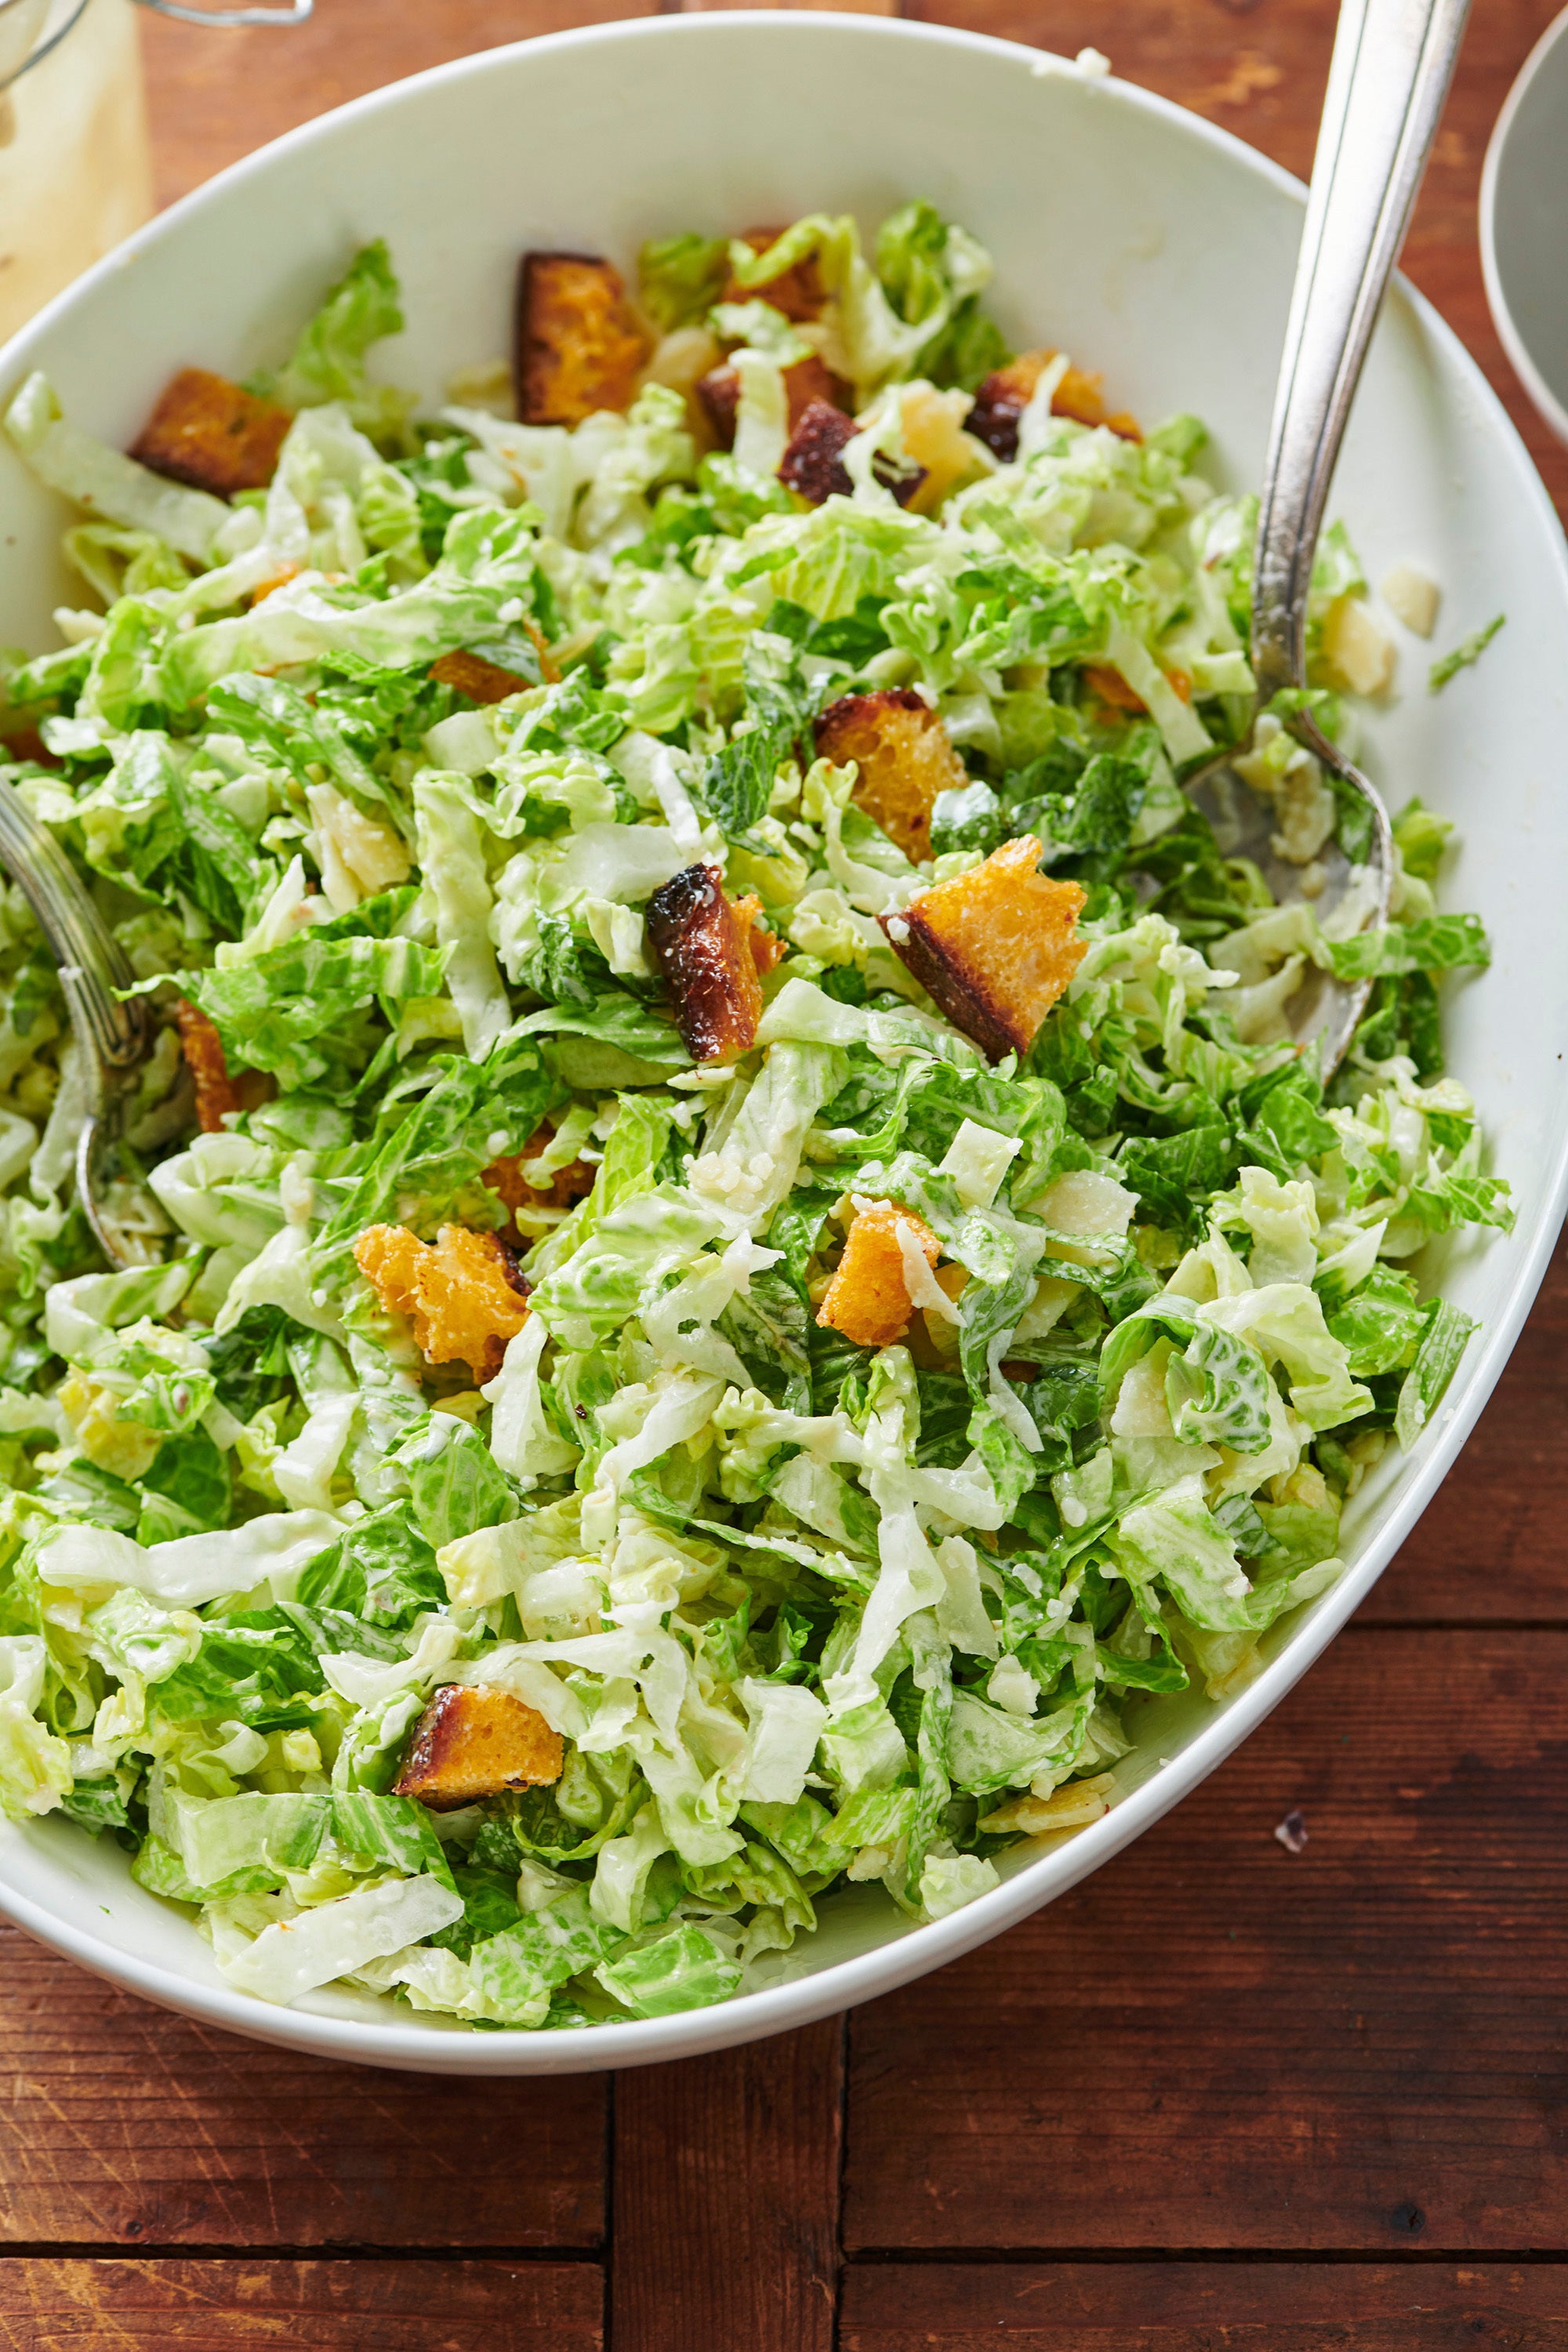 A Caesar salad